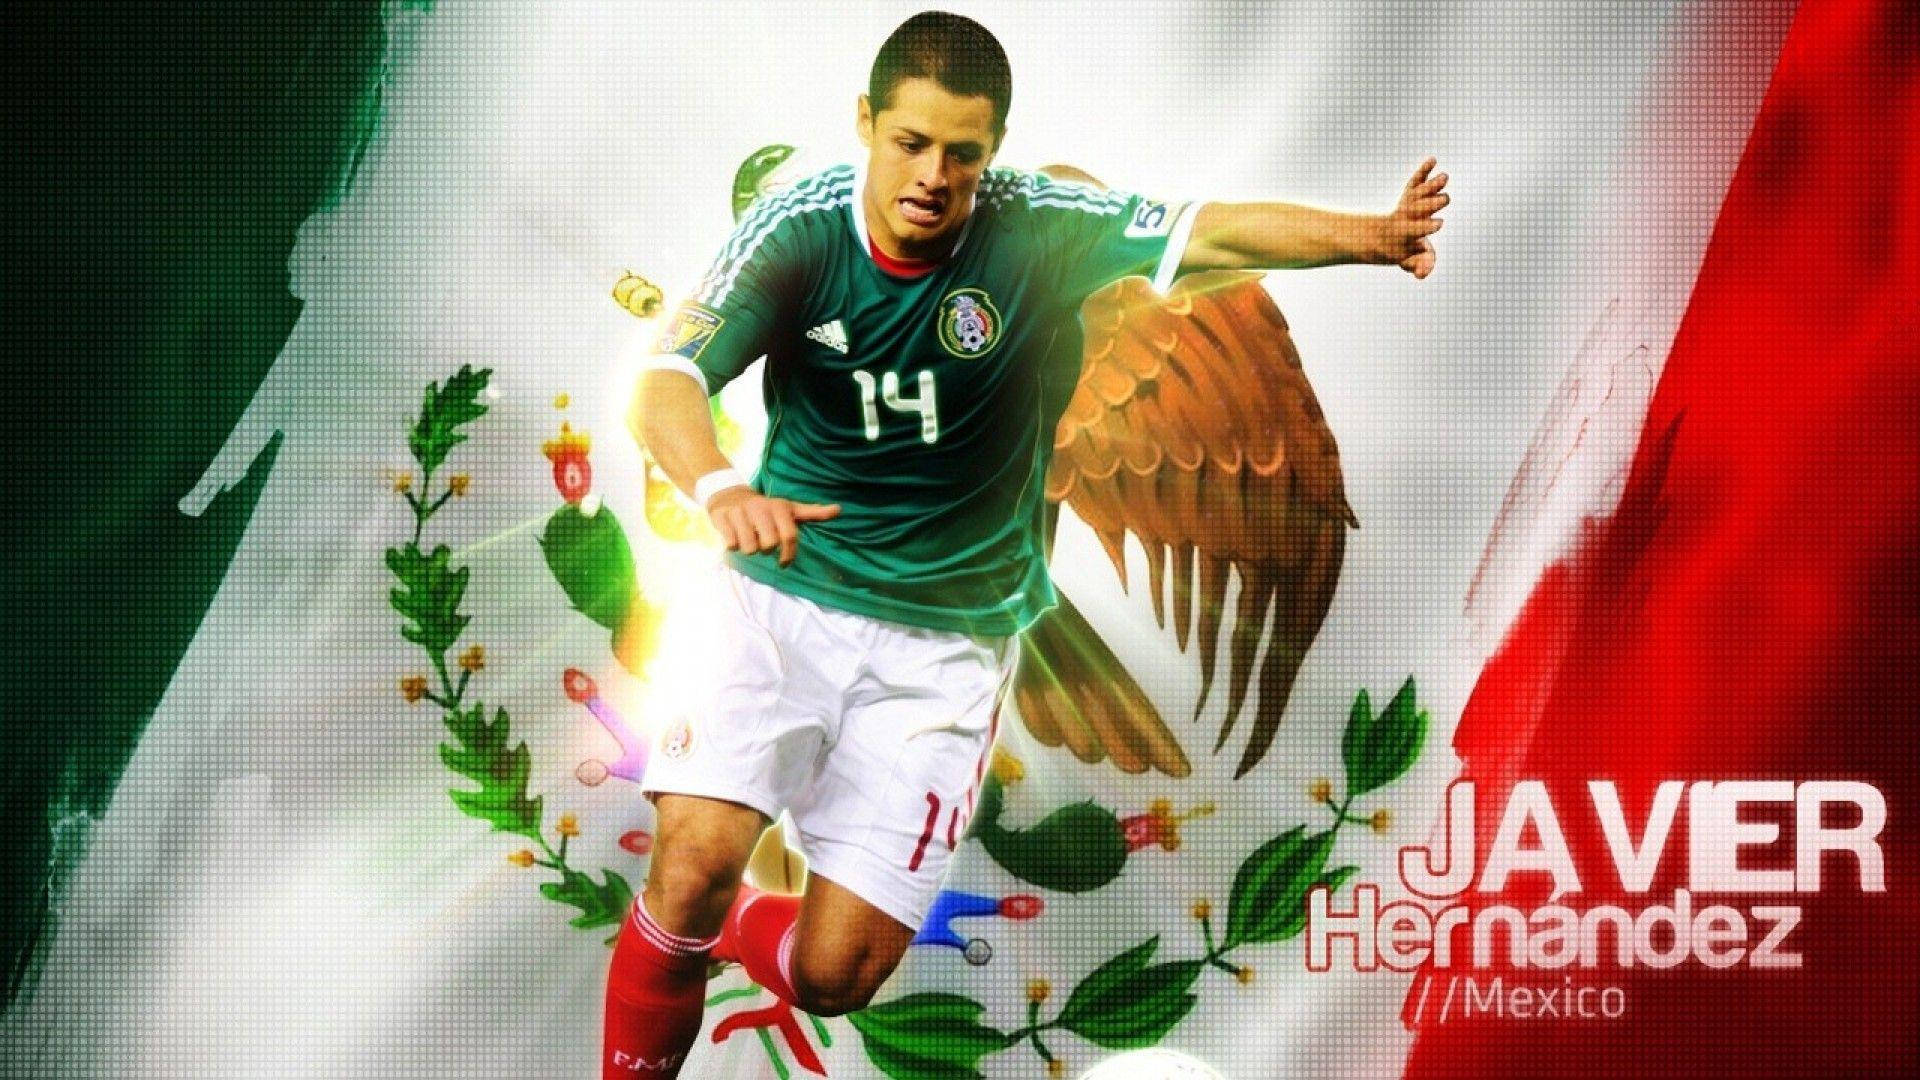 Mexican Football Star Javier Hernandez